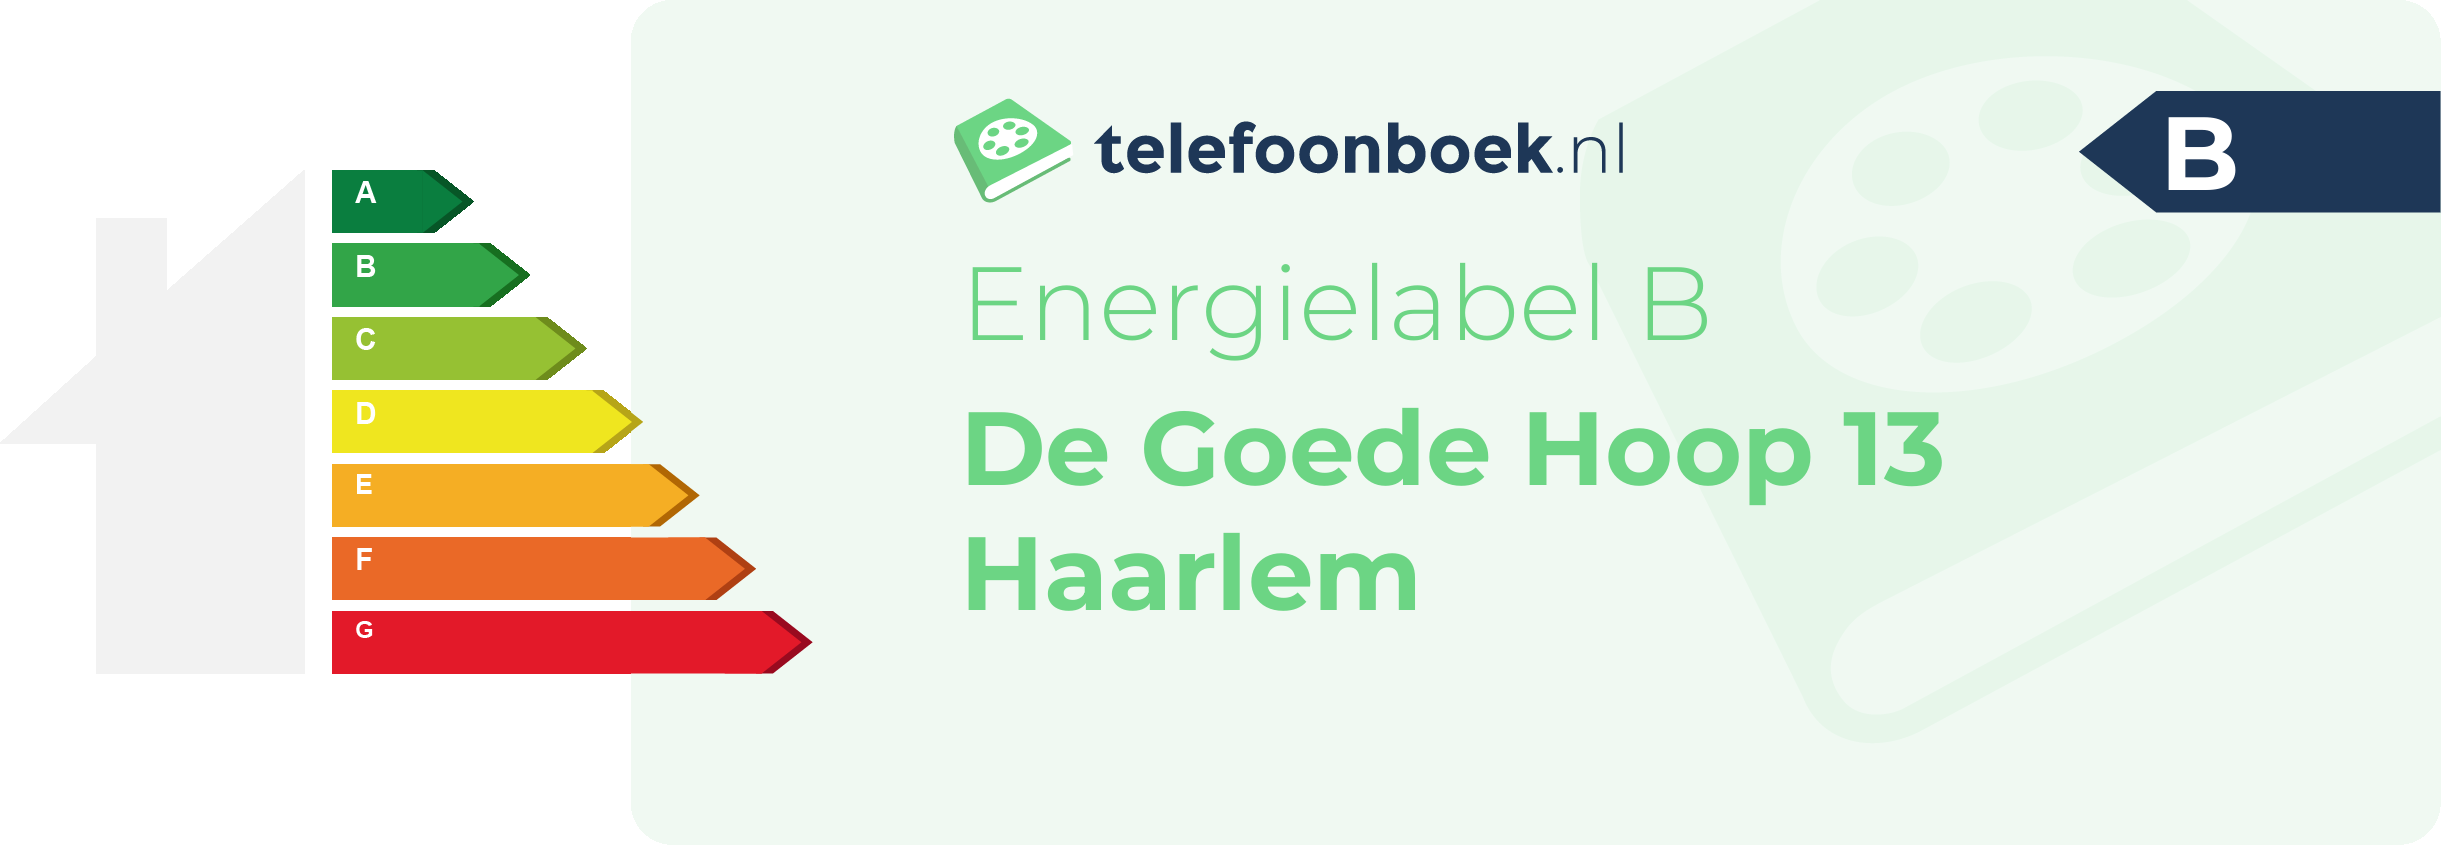 Energielabel De Goede Hoop 13 Haarlem